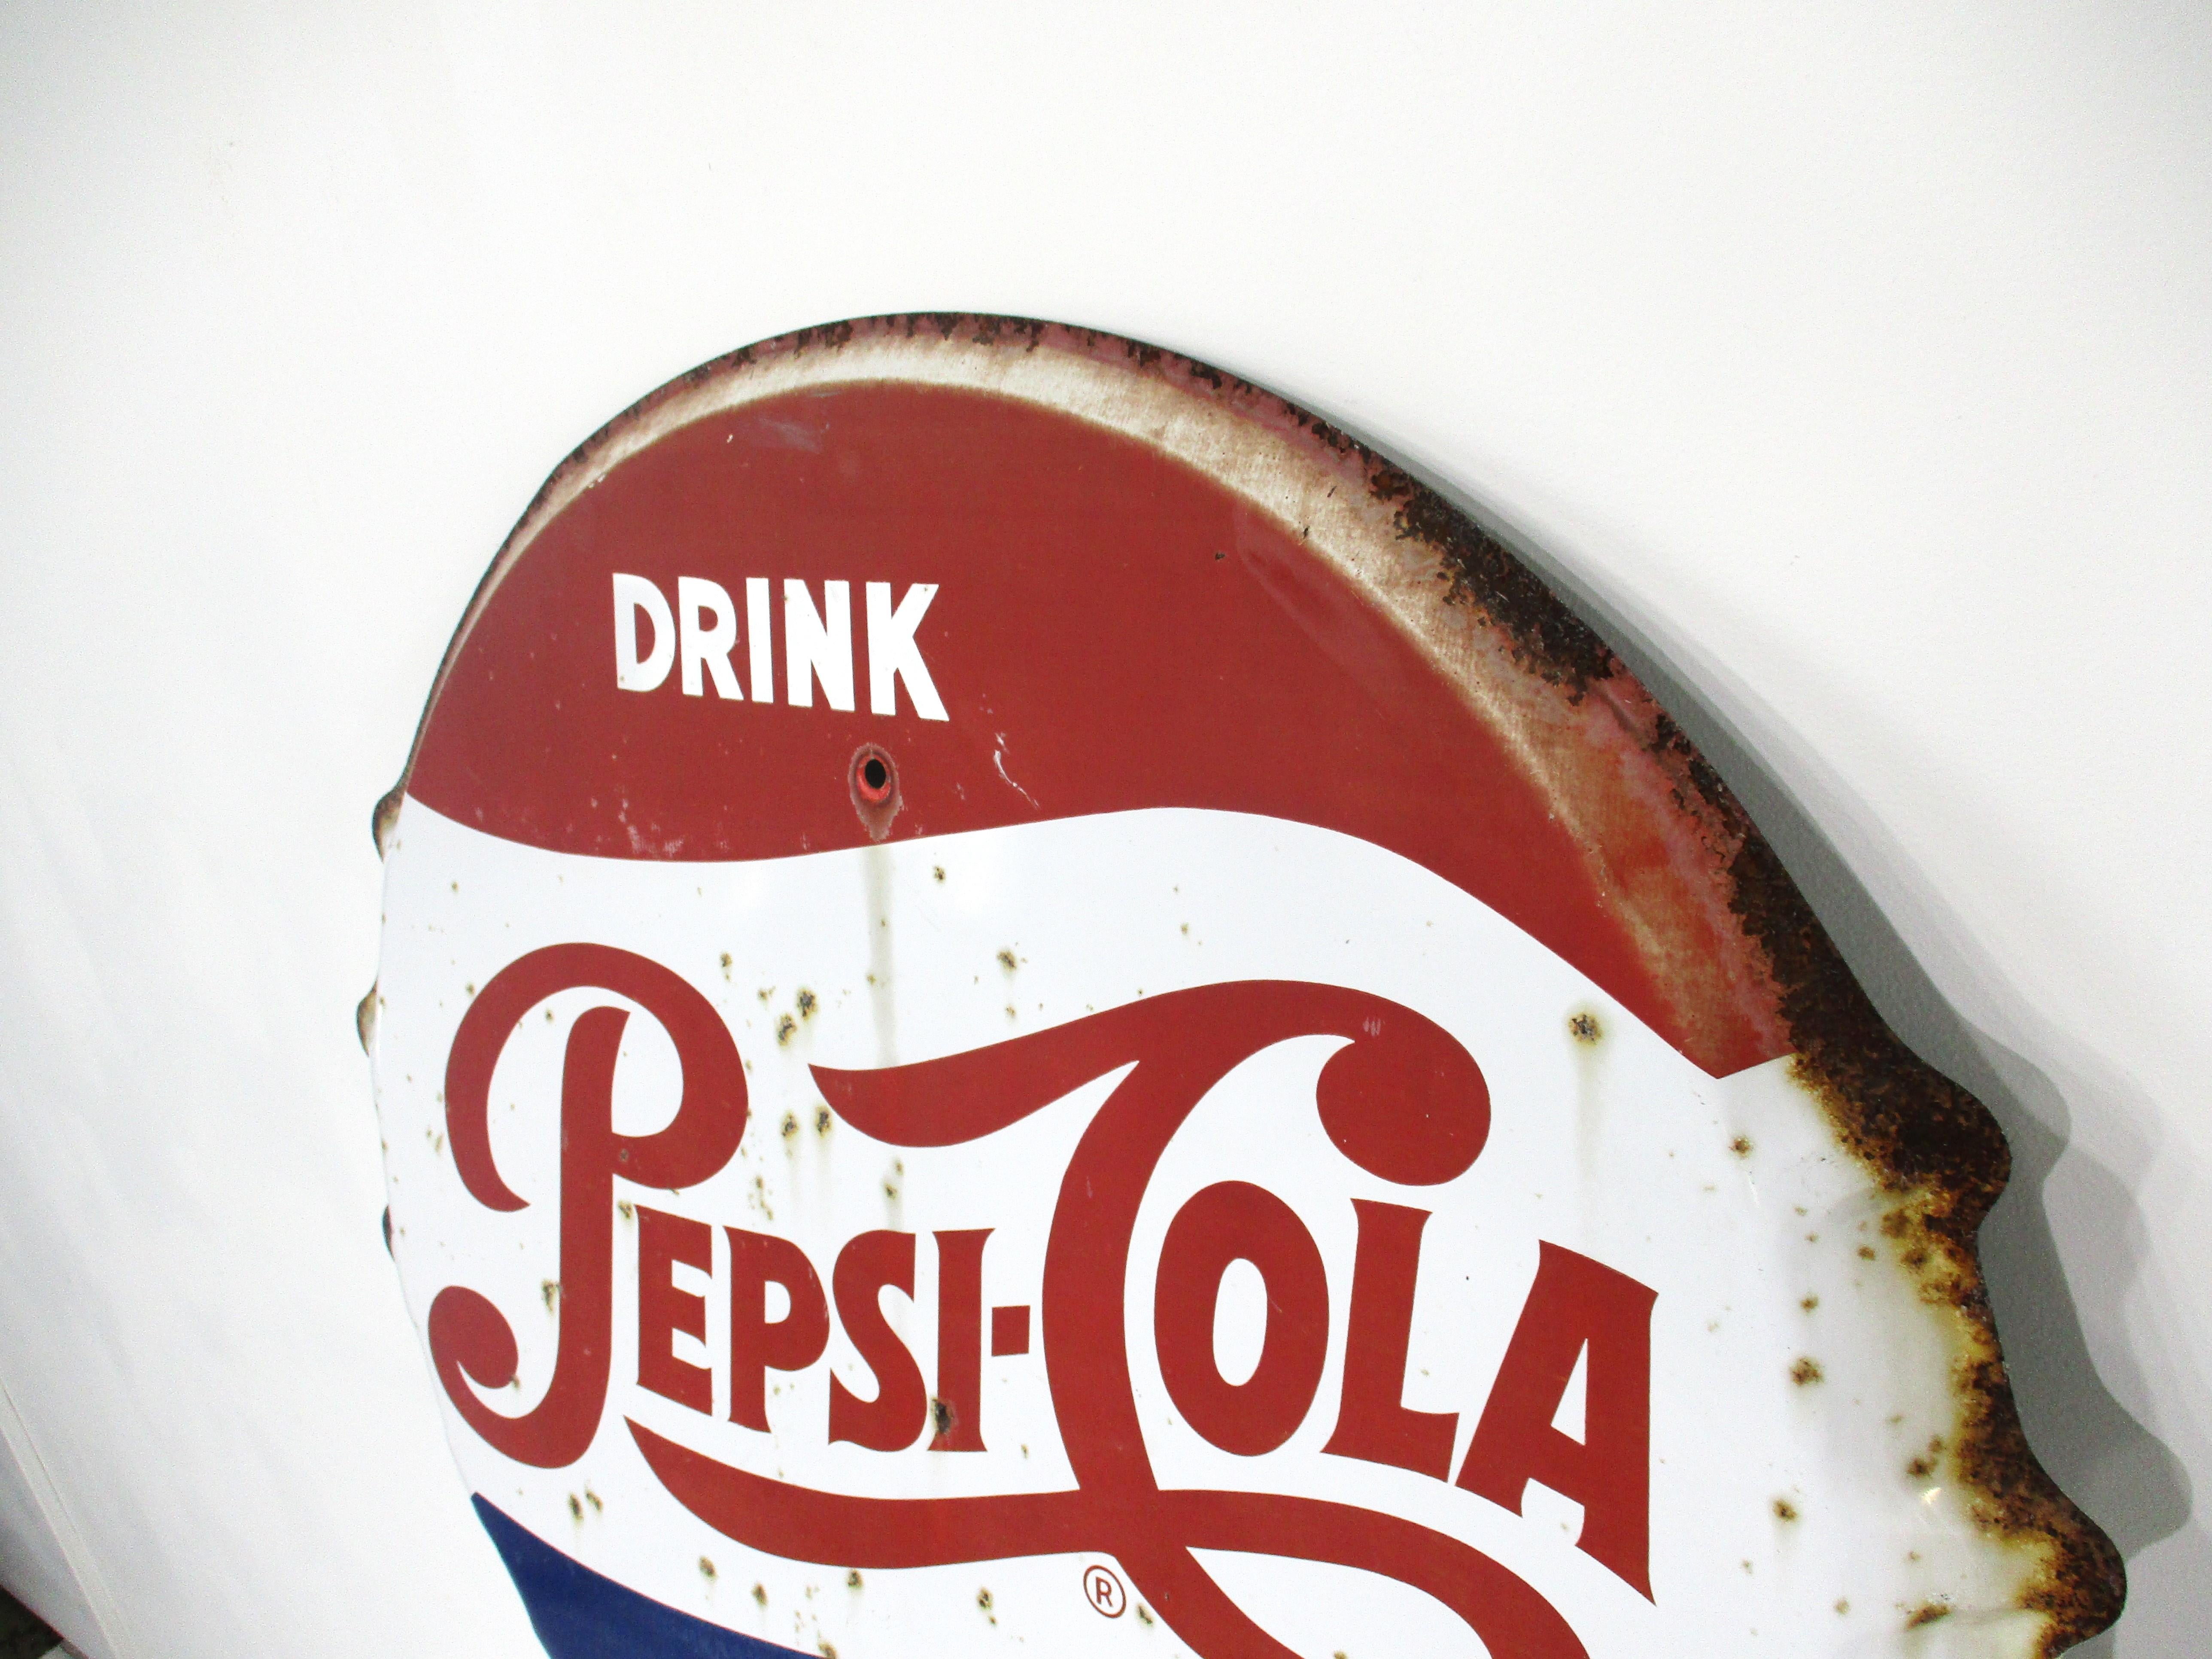 20th Century Large Pepsi Cola Metal Bottle Cap Sign by Stout 